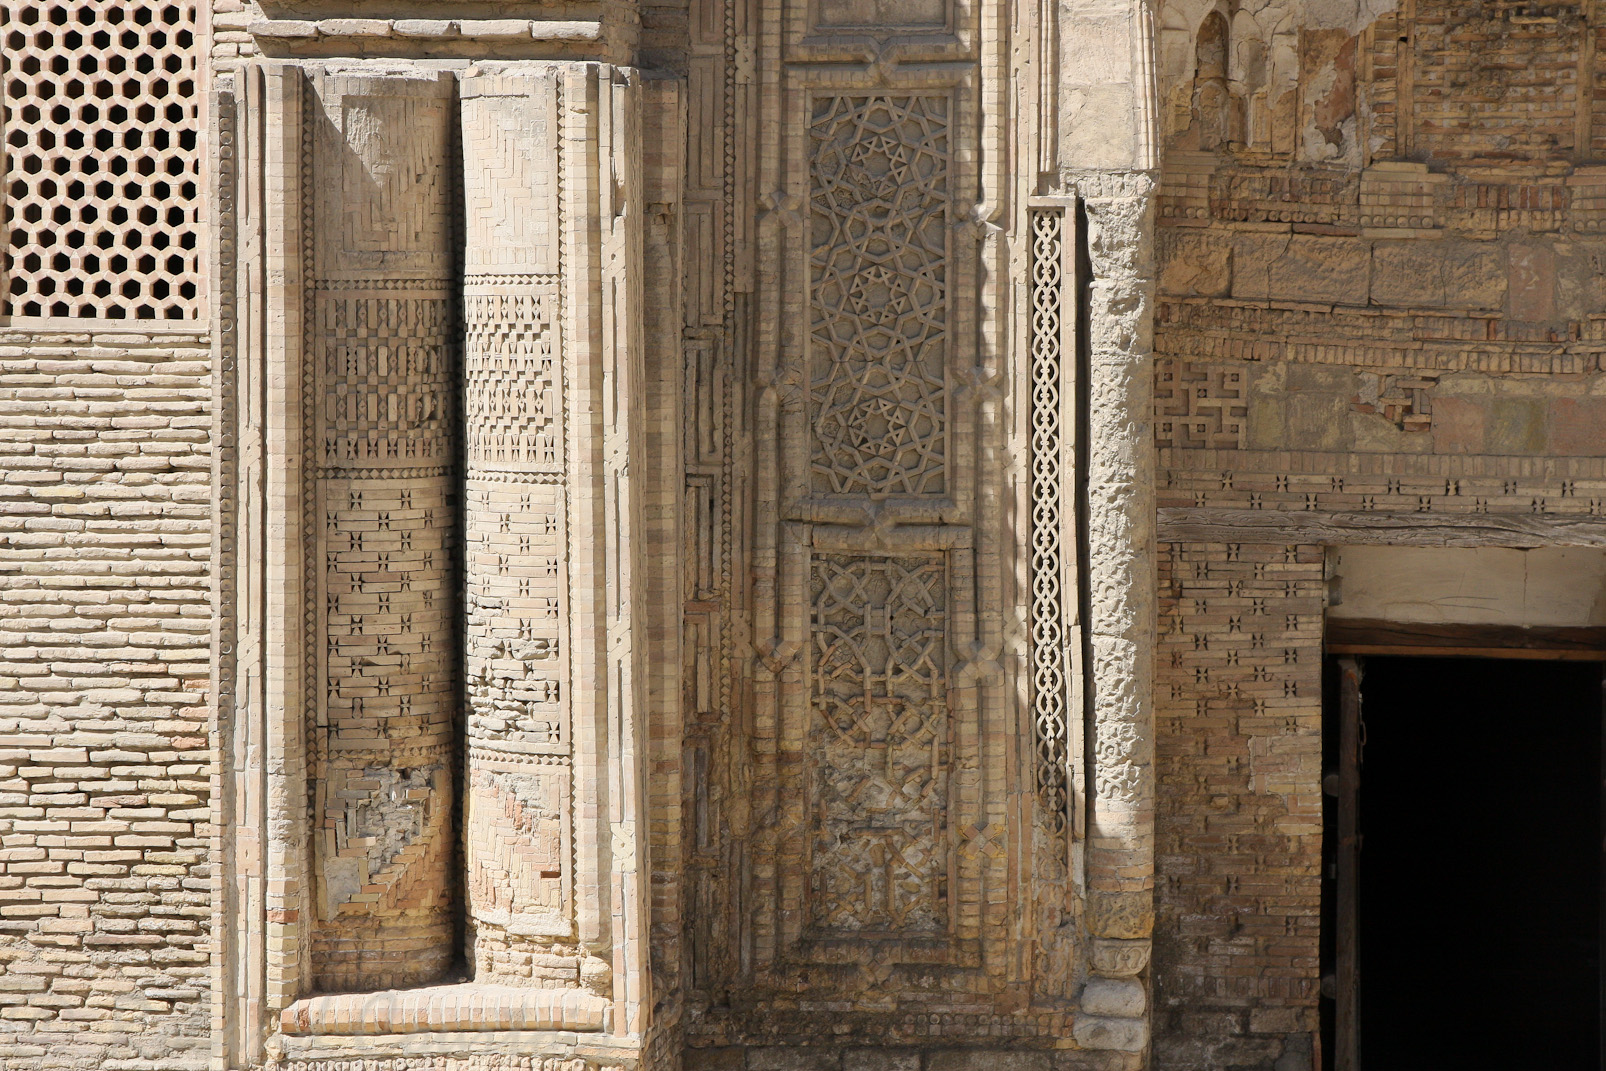 Mosquée Magok-i-Attari, sur la façade, un jeu de briques en arrondi figure un livre ouvert.